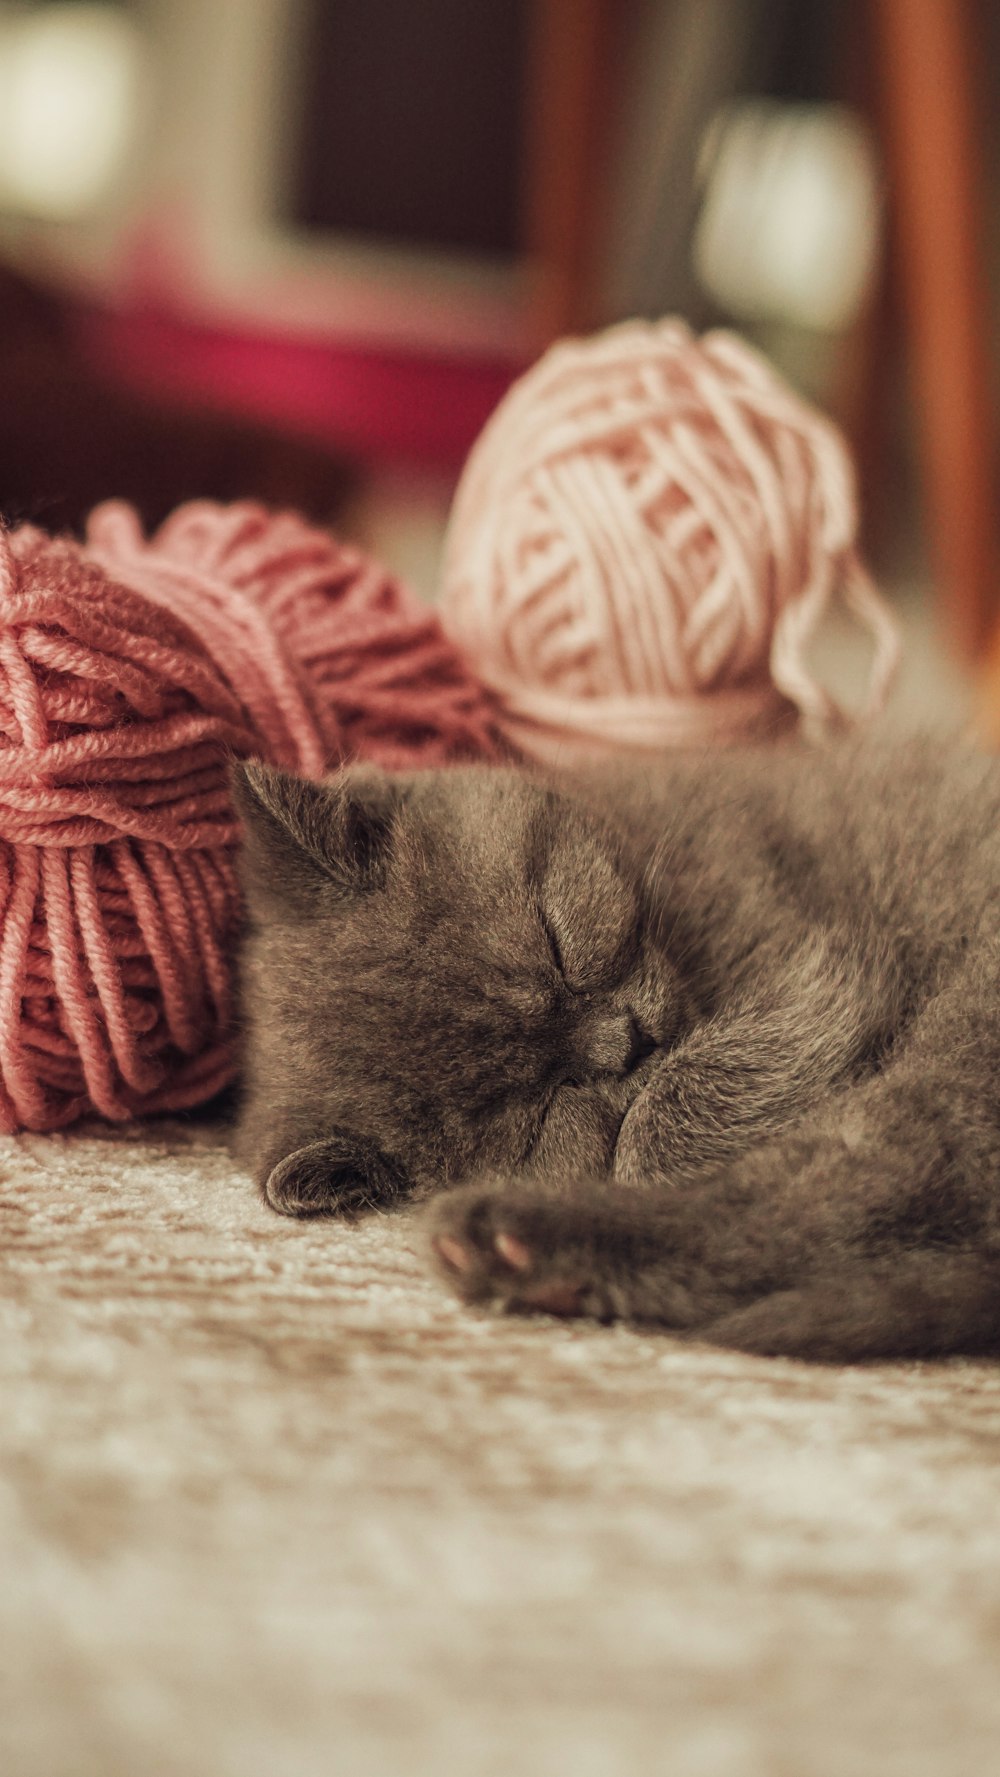 a cat sleeping on the floor next to balls of yarn